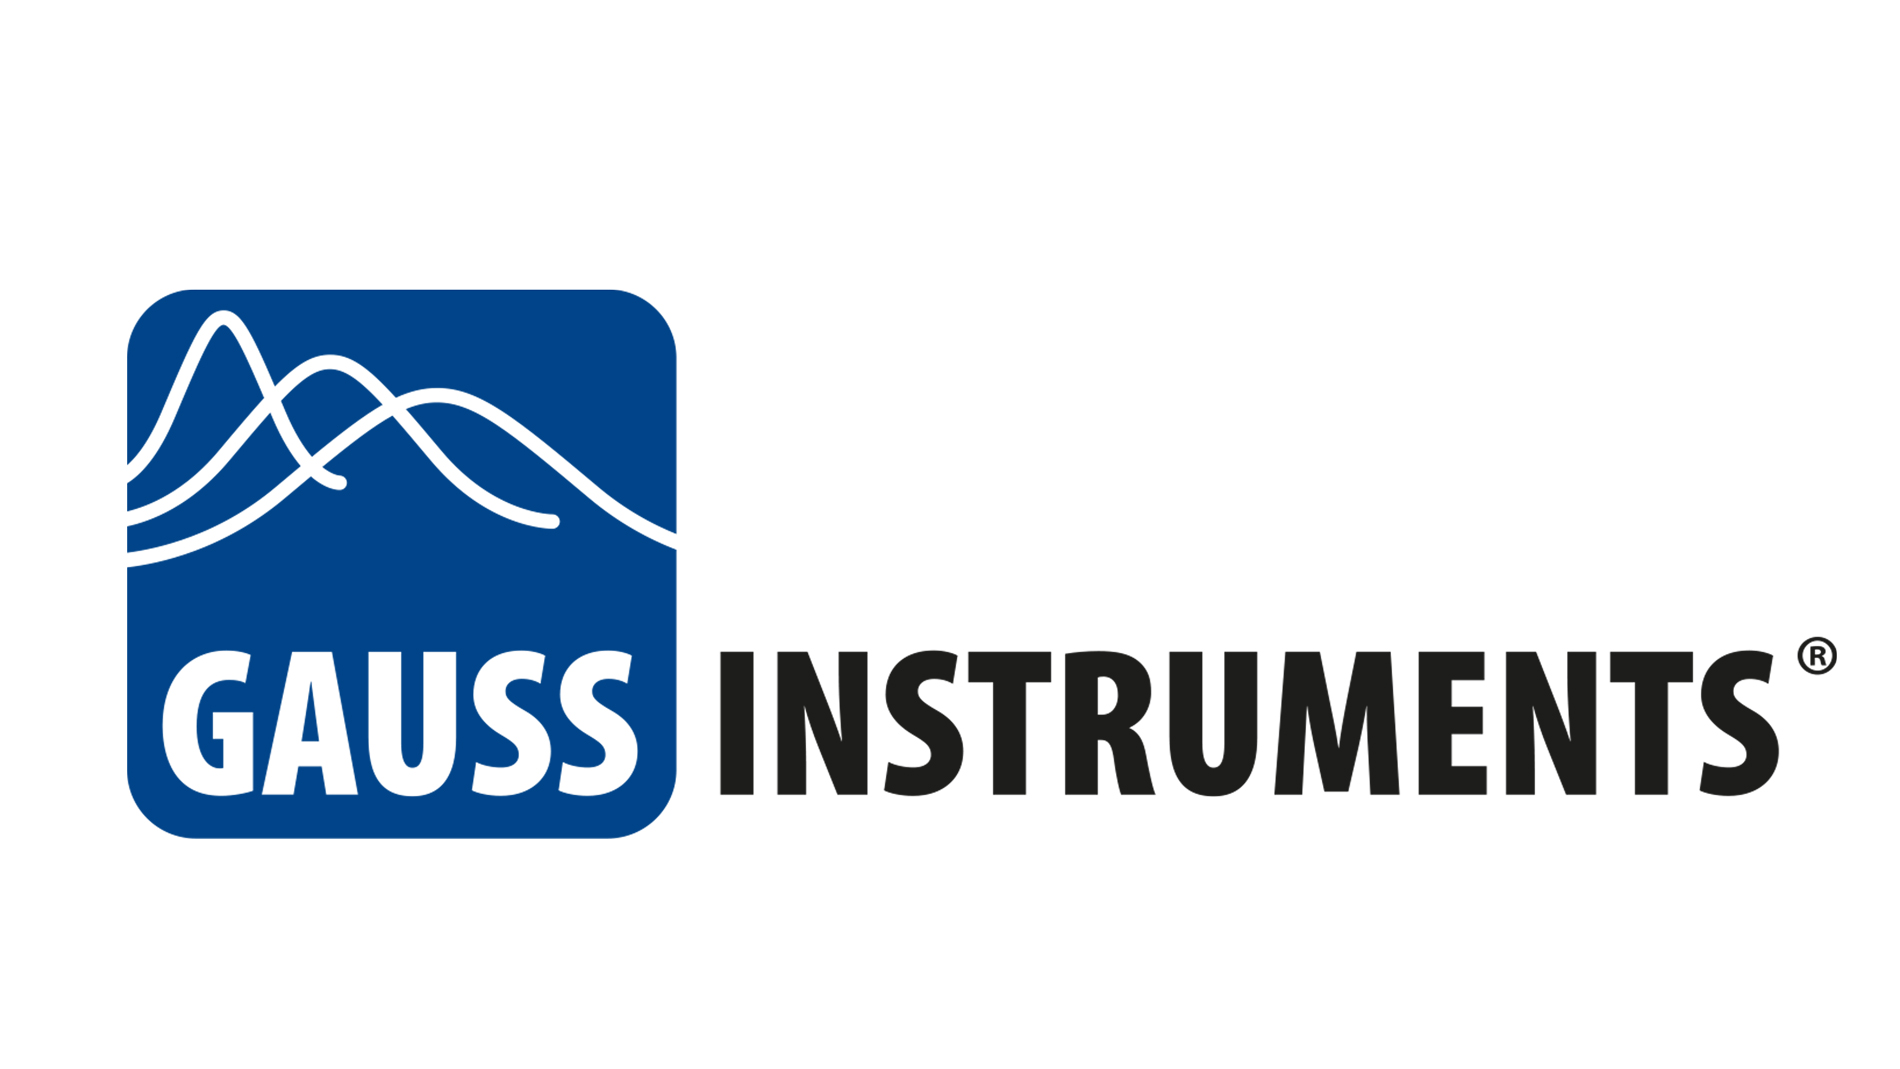 GAUSS INSTRUMENTS International GmbH